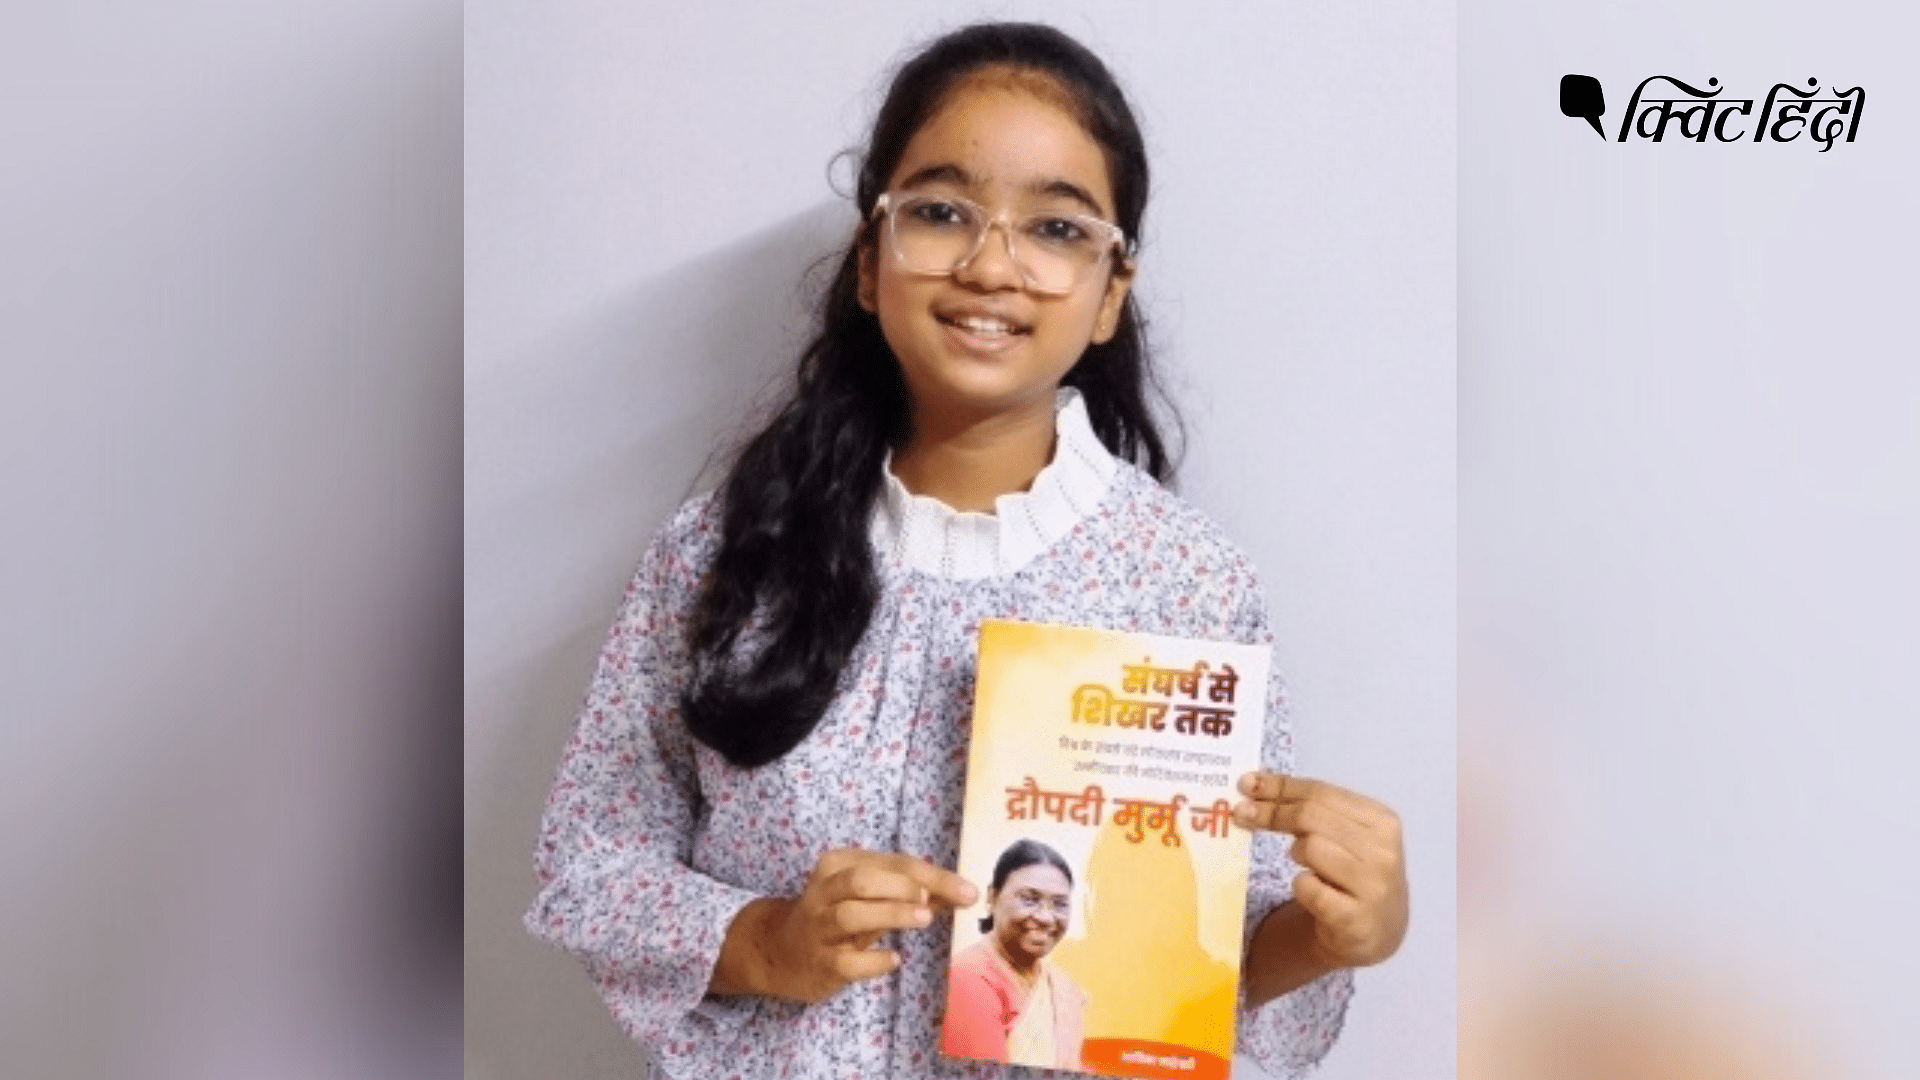 <div class="paragraphs"><p>राष्ट्रपति उम्मीदवार Draupadi Murmu पर 13 साल की बच्ची ने लिखी किताब</p></div>